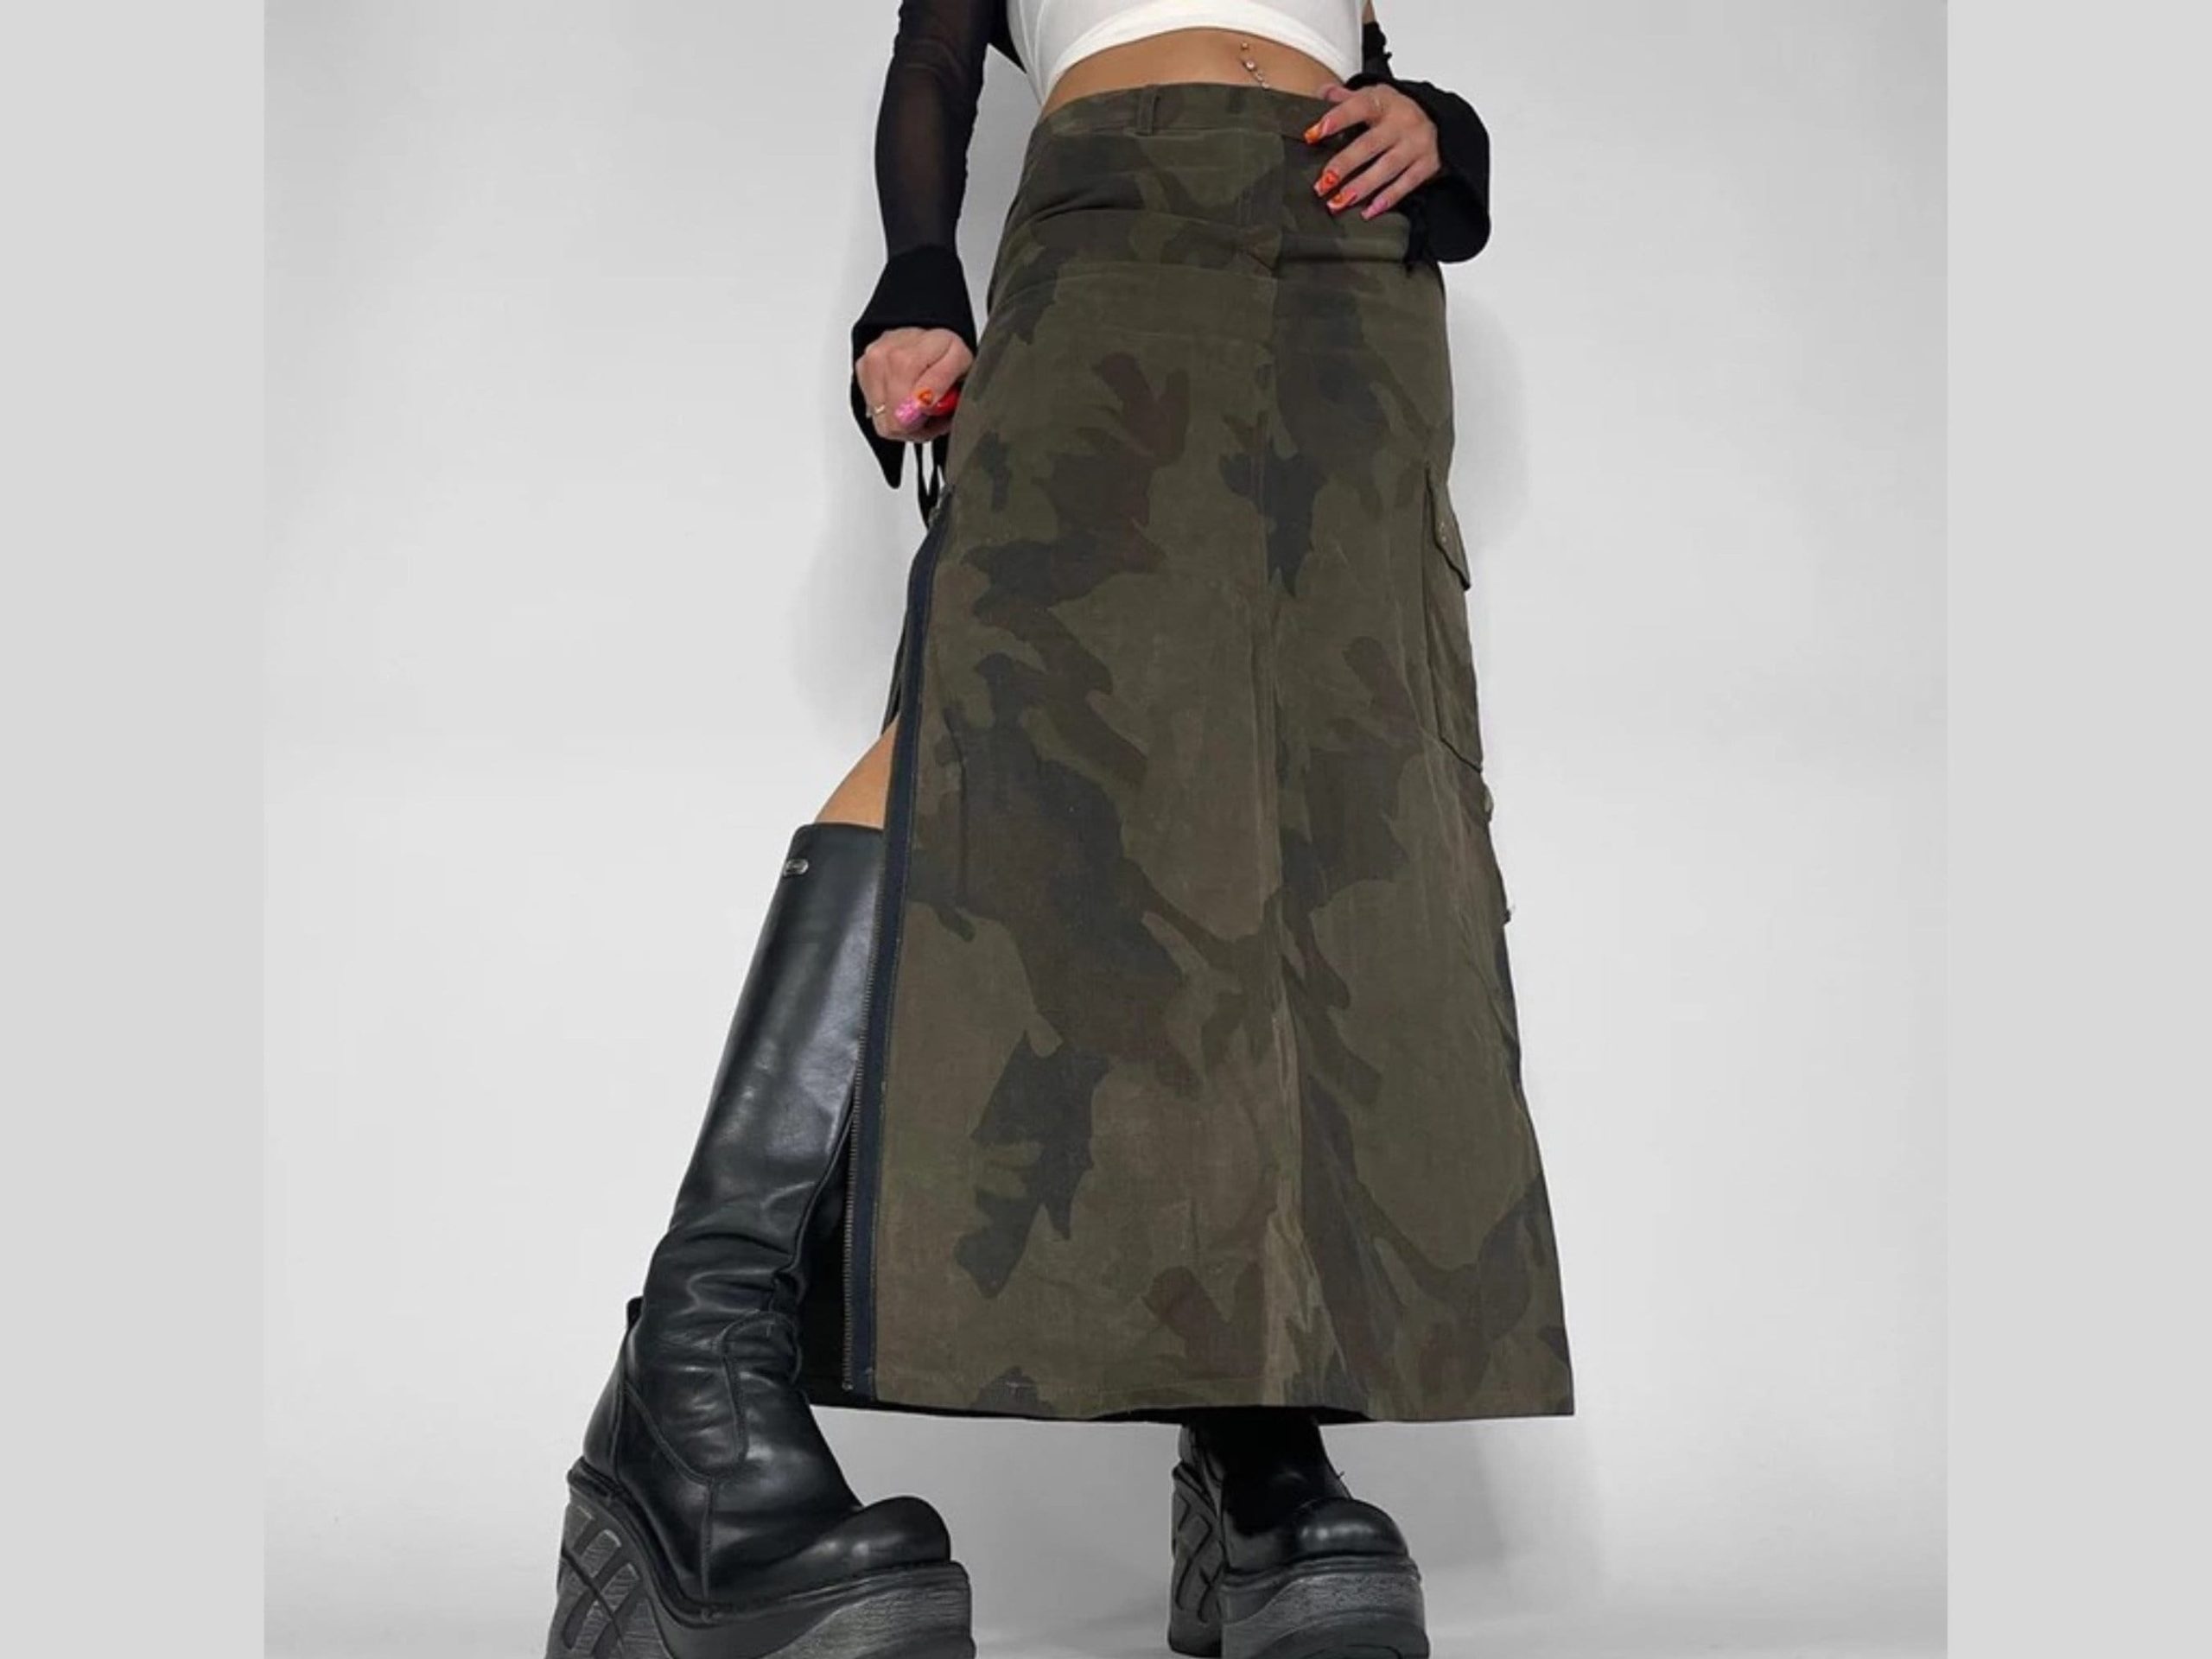 Low Rise Camouflage Cargo Skirt Long Skirt With Zip Up Splits Cargo Skirt Retro Skirt Y2k Midi Skirt 90s Grunge Fashion Vintage Skirts